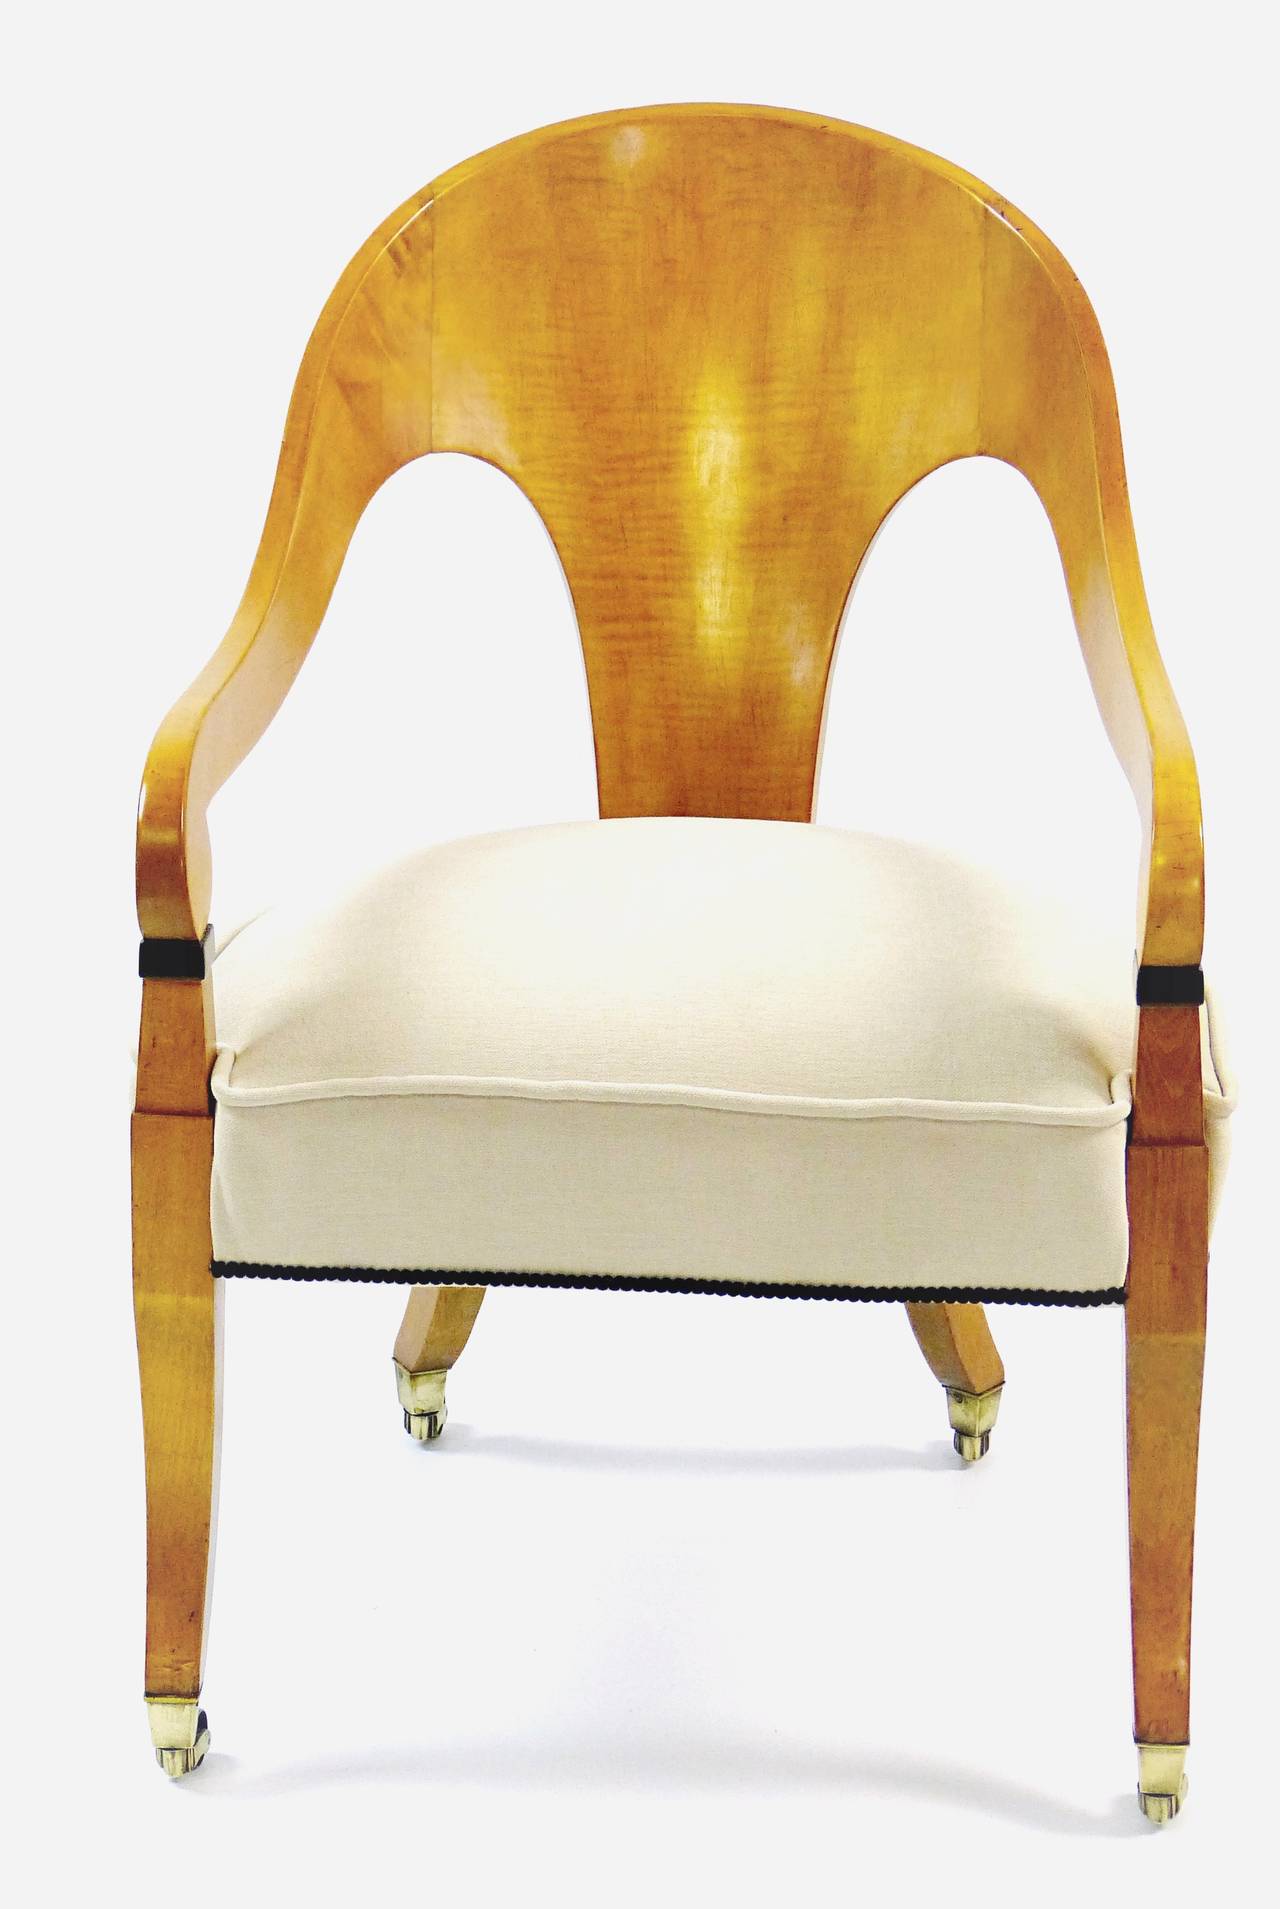 Early 19th Century Fine Biedermeier Period Armchair